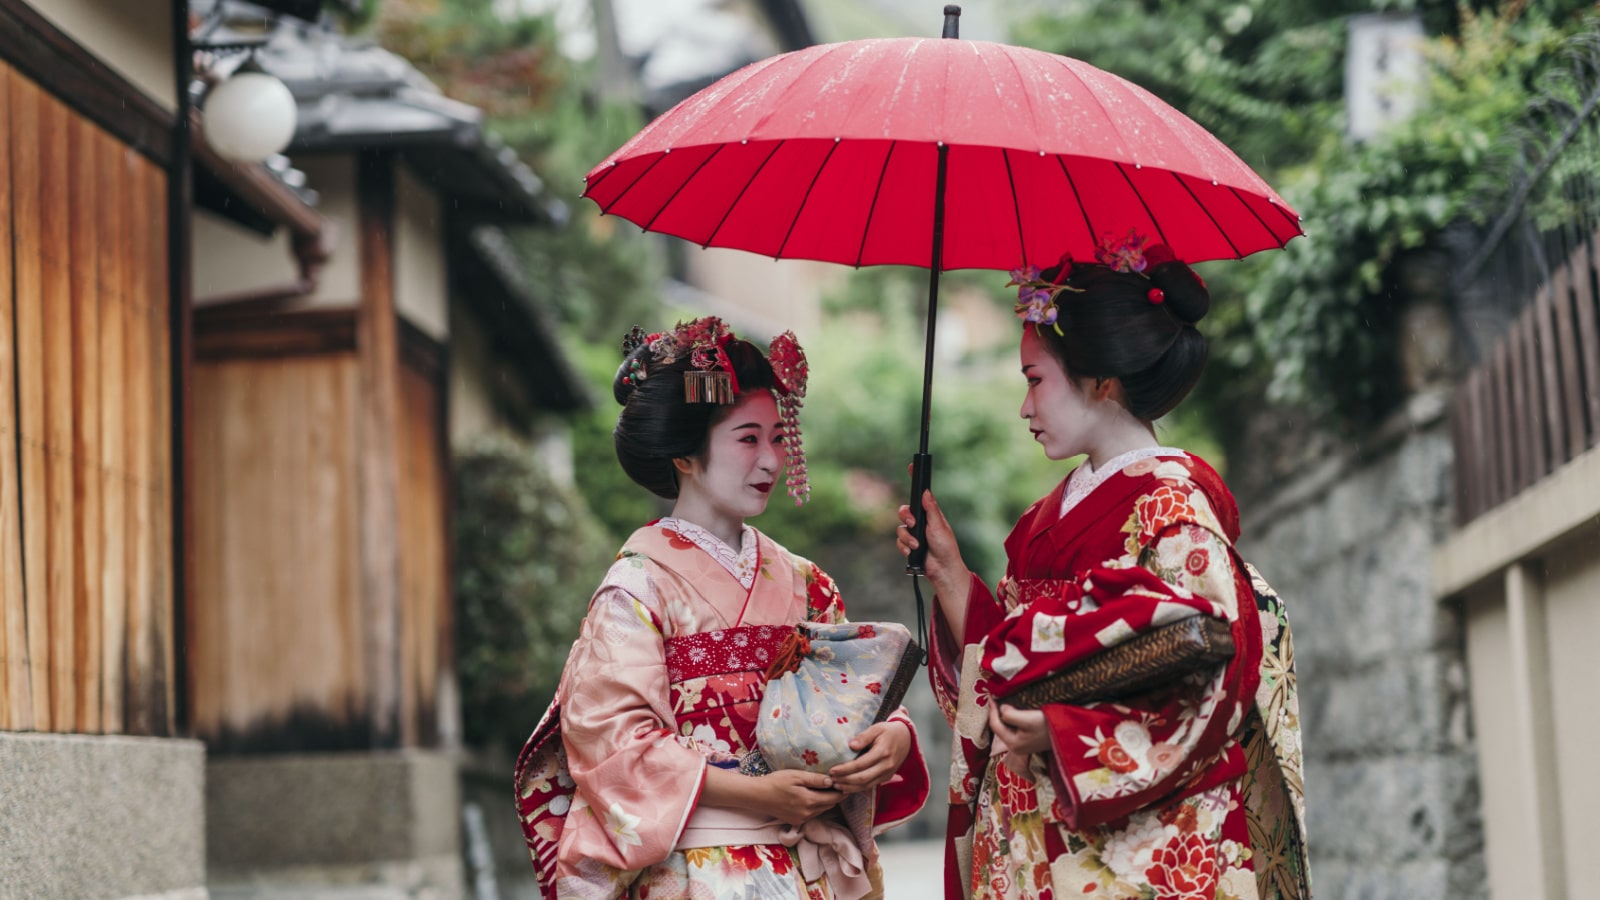 Maiko geisha walking on a street of Gion in Kyoto Japan